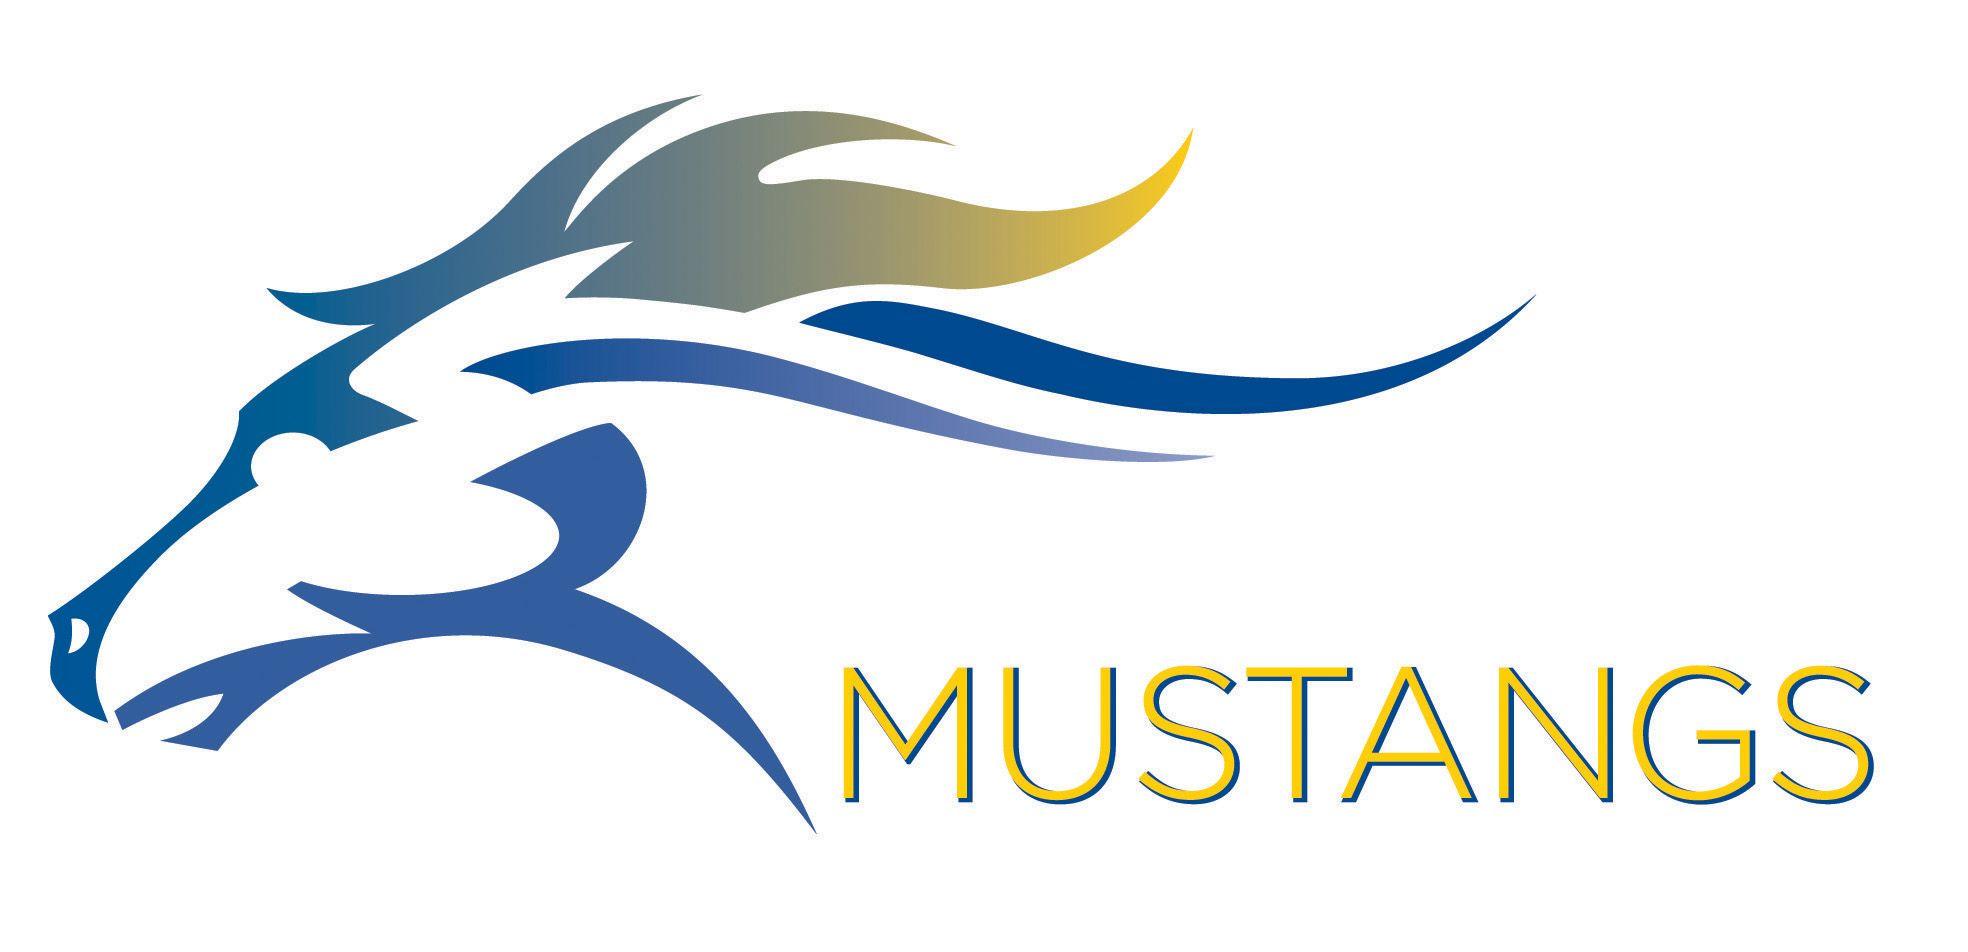 Mustang Mascot Logo - Free Mustang Mascot Logo, Download Free Clip Art, Free Clip Art on ...